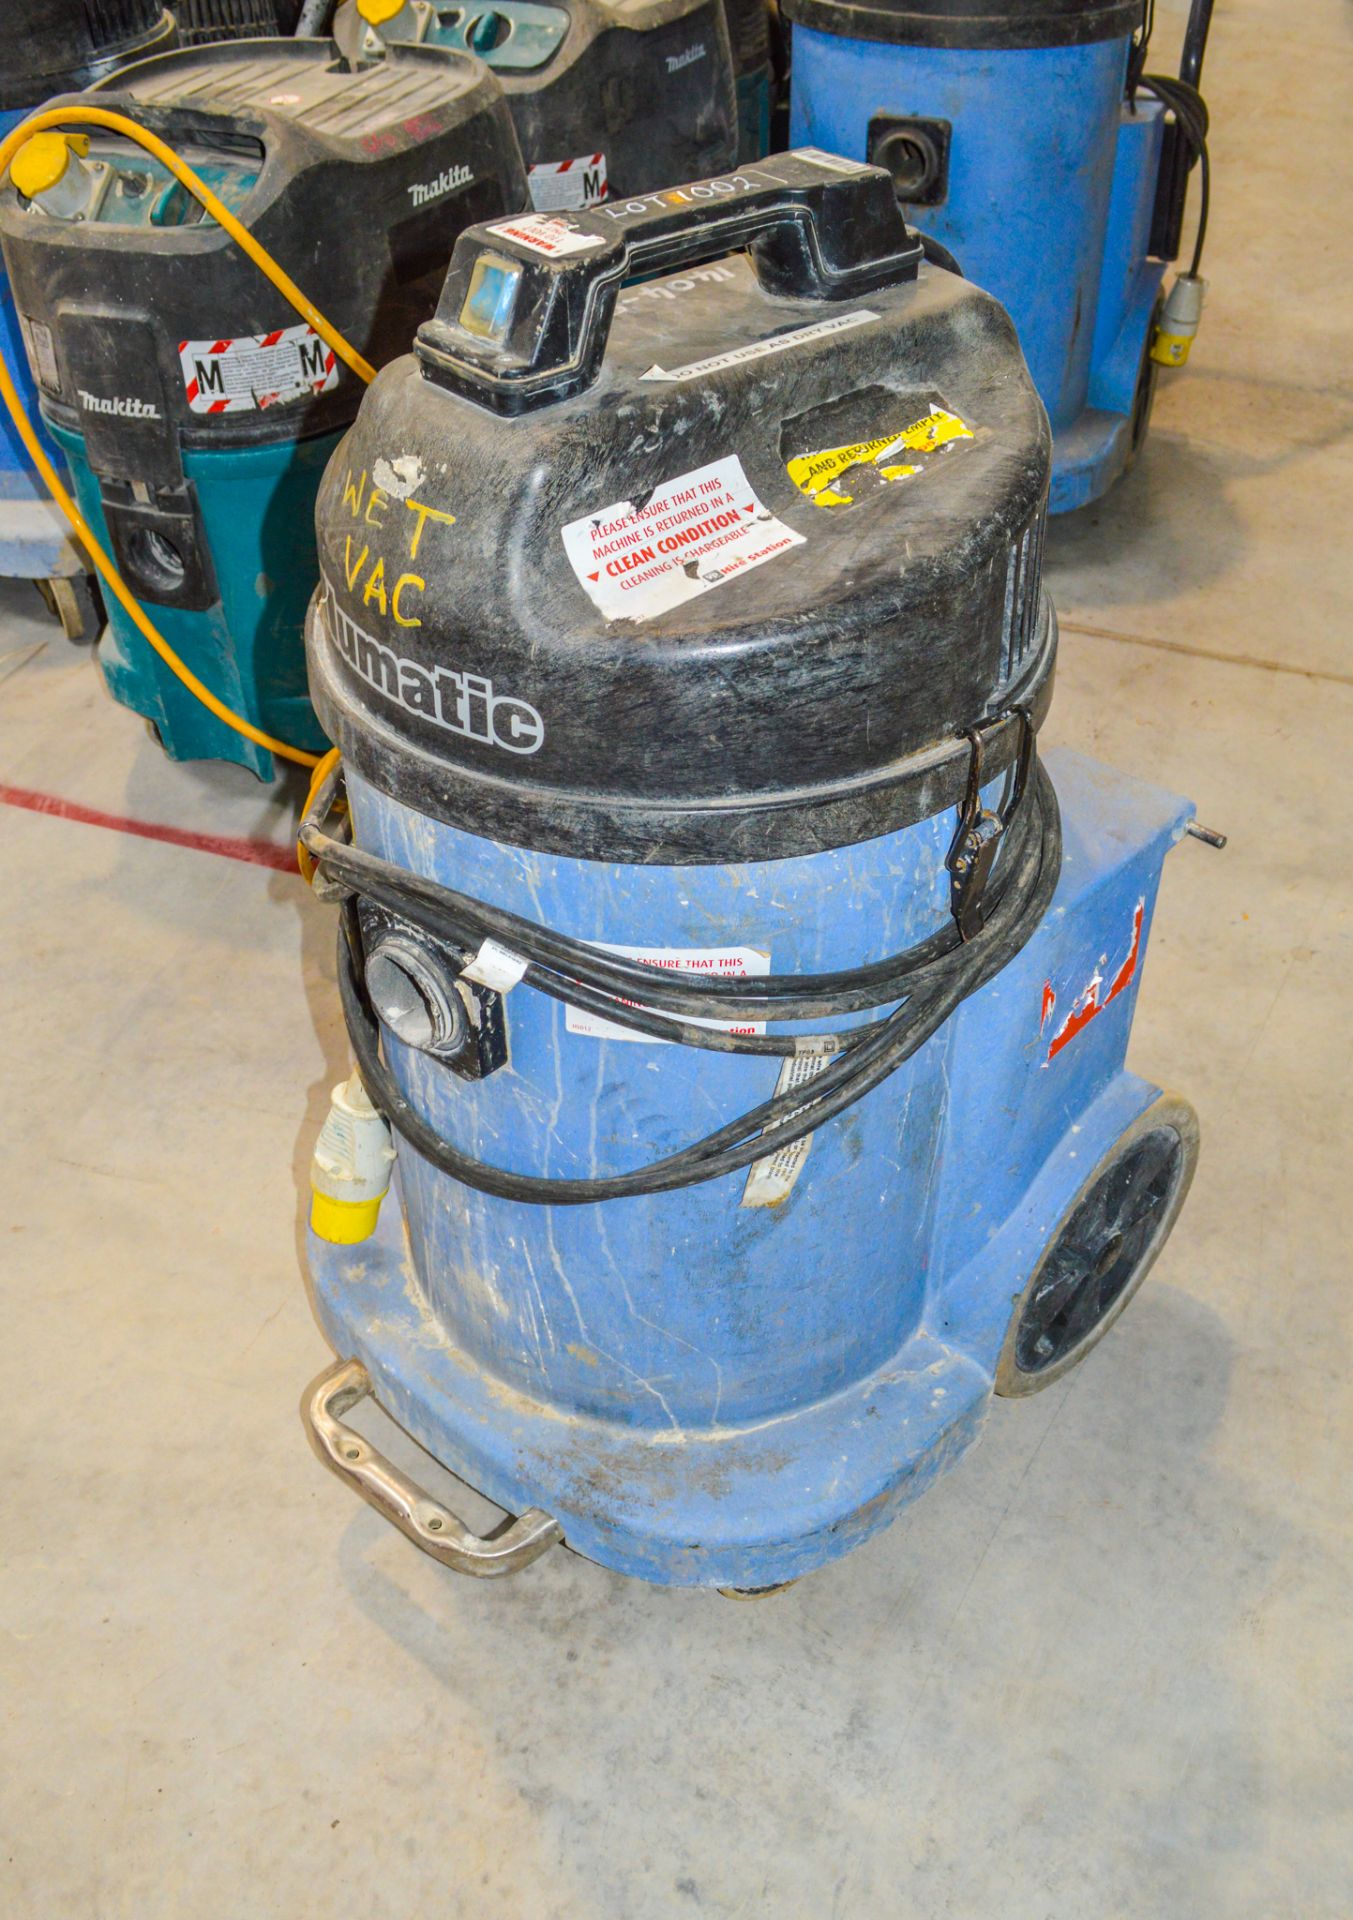 Numatic 110v vacuum cleaner 1404-5505